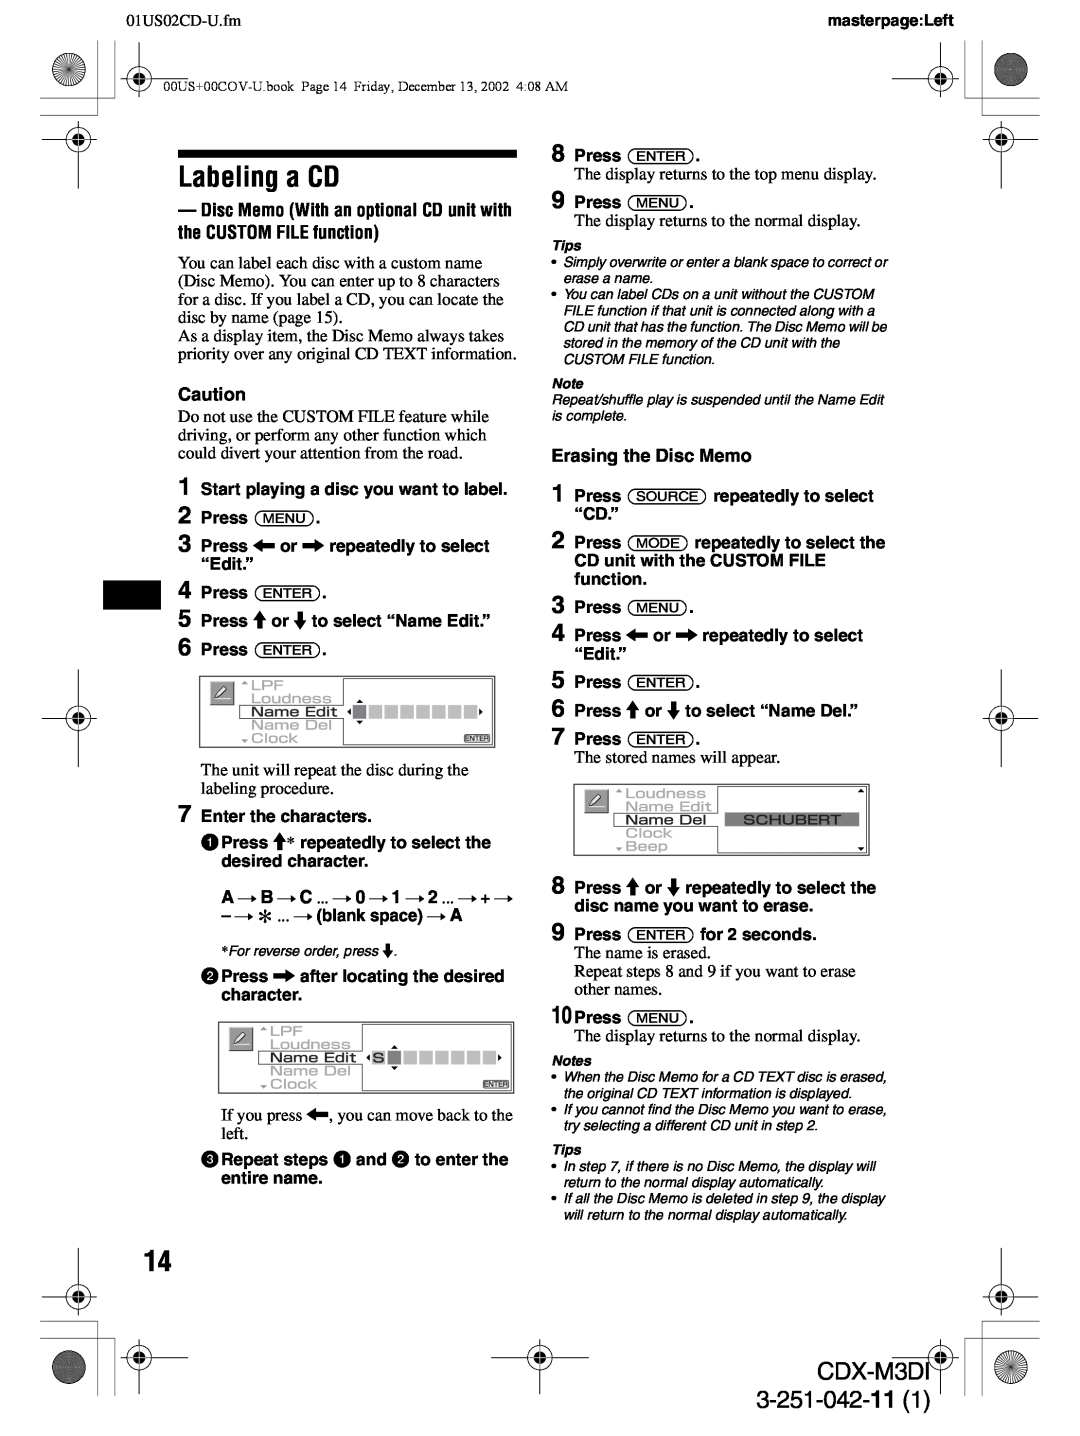 Sony CDX-M3DI operating instructions Labeling a CD, 3-251-042-11, Erasing the Disc Memo, 01US02CD-U.fm 